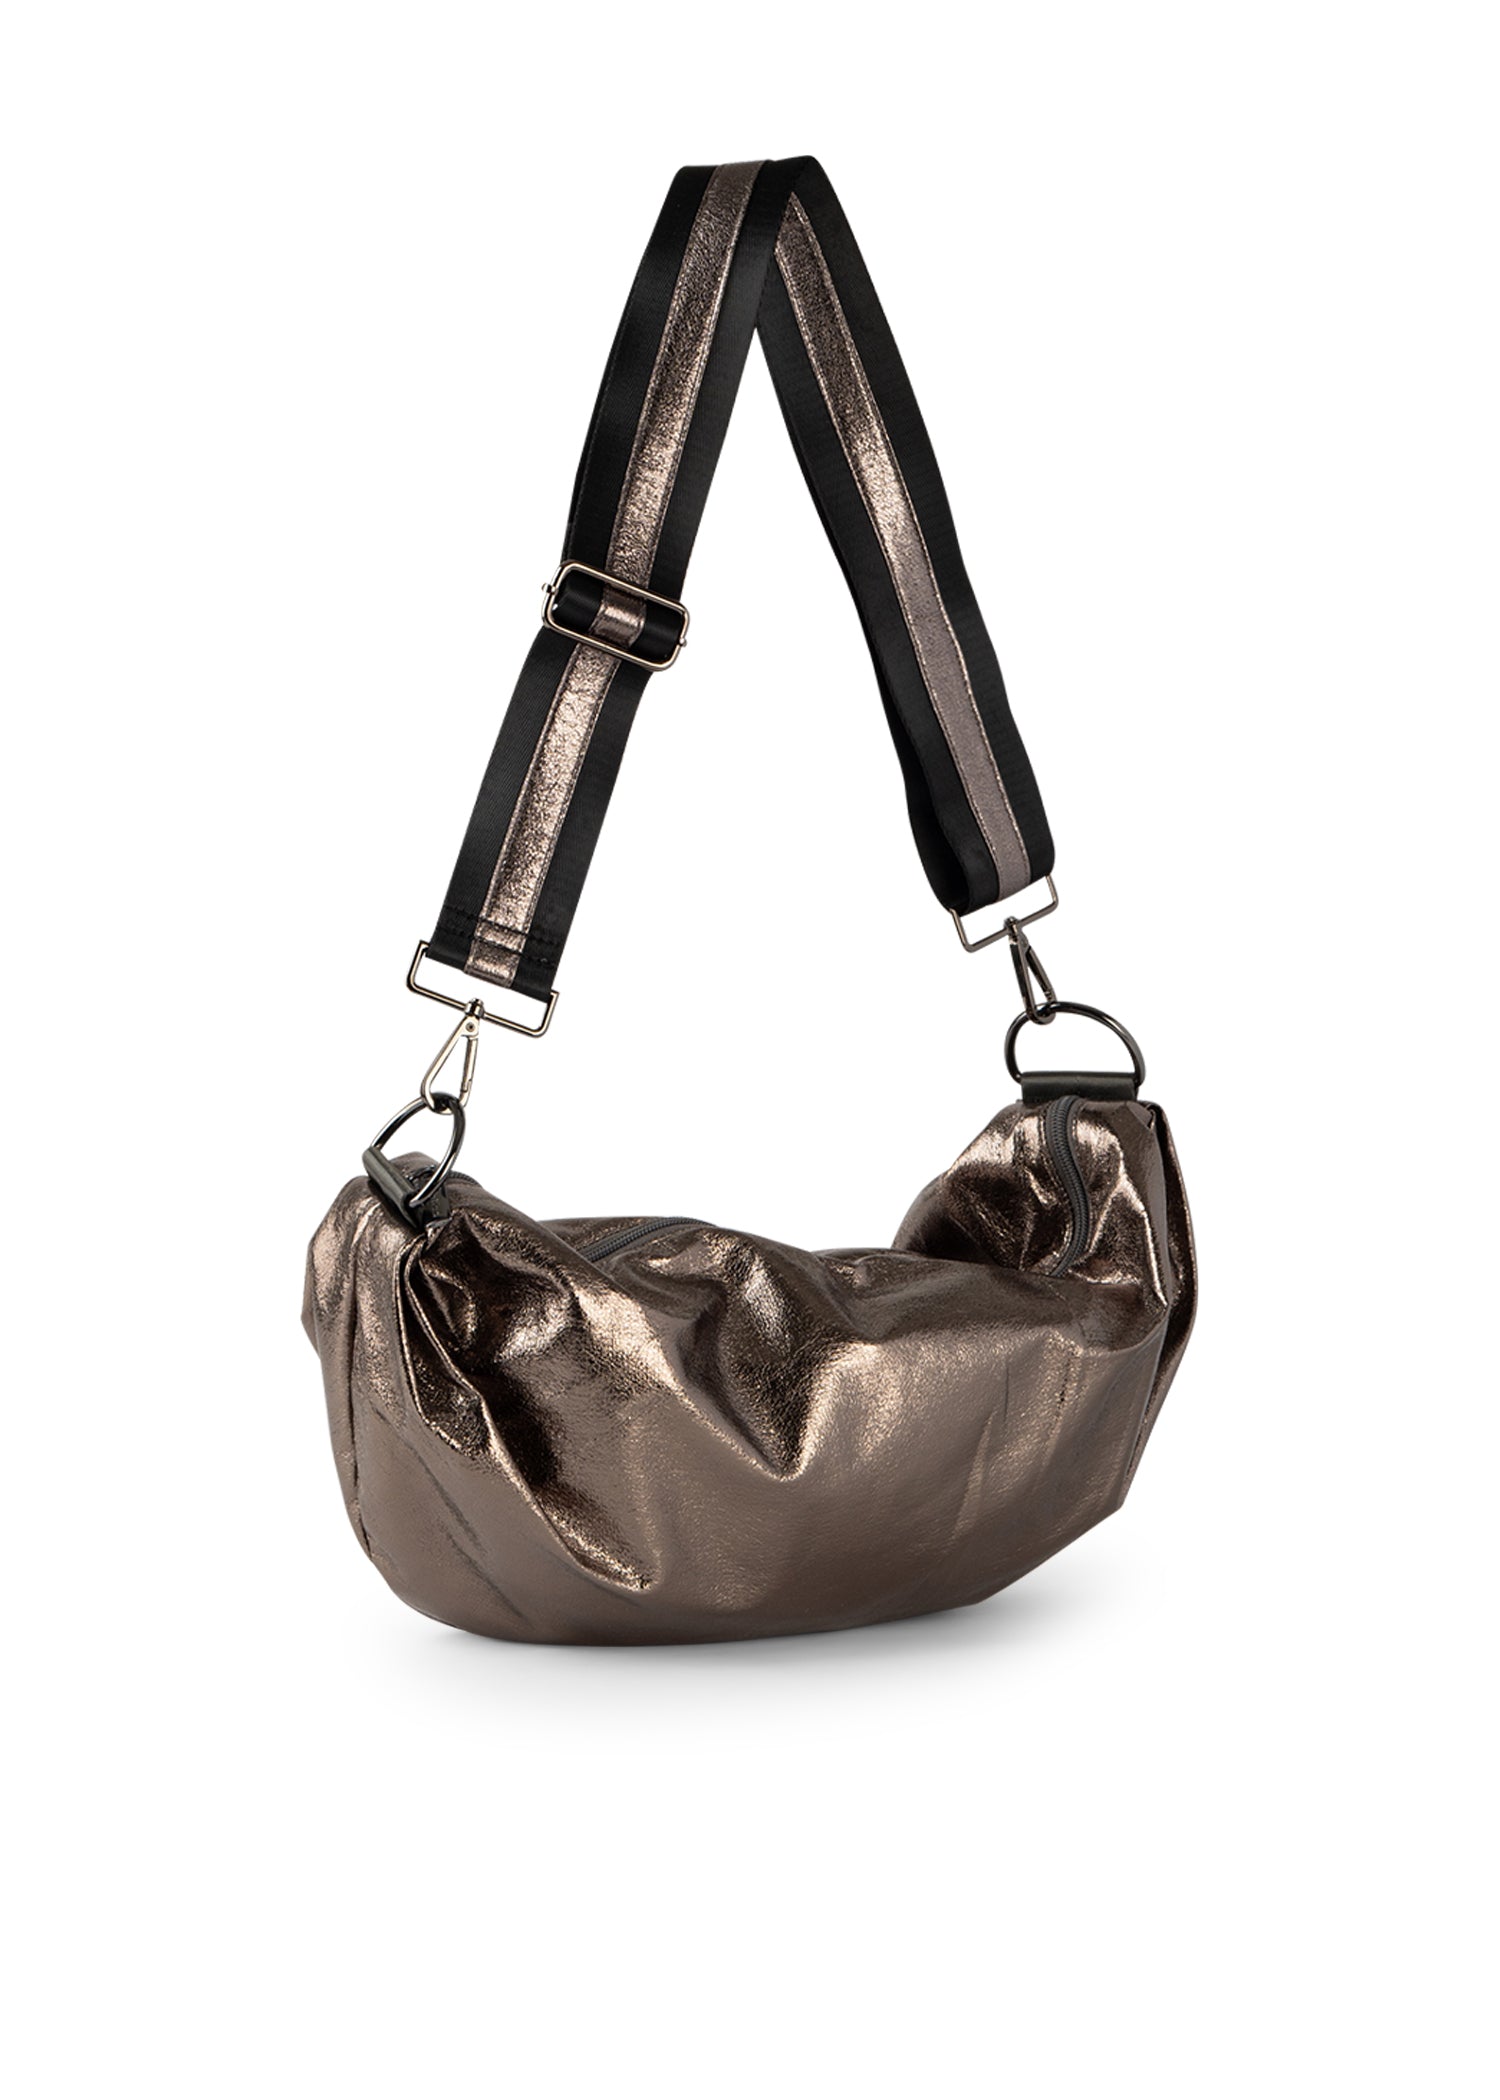 The Ollie Nova Sling Bag